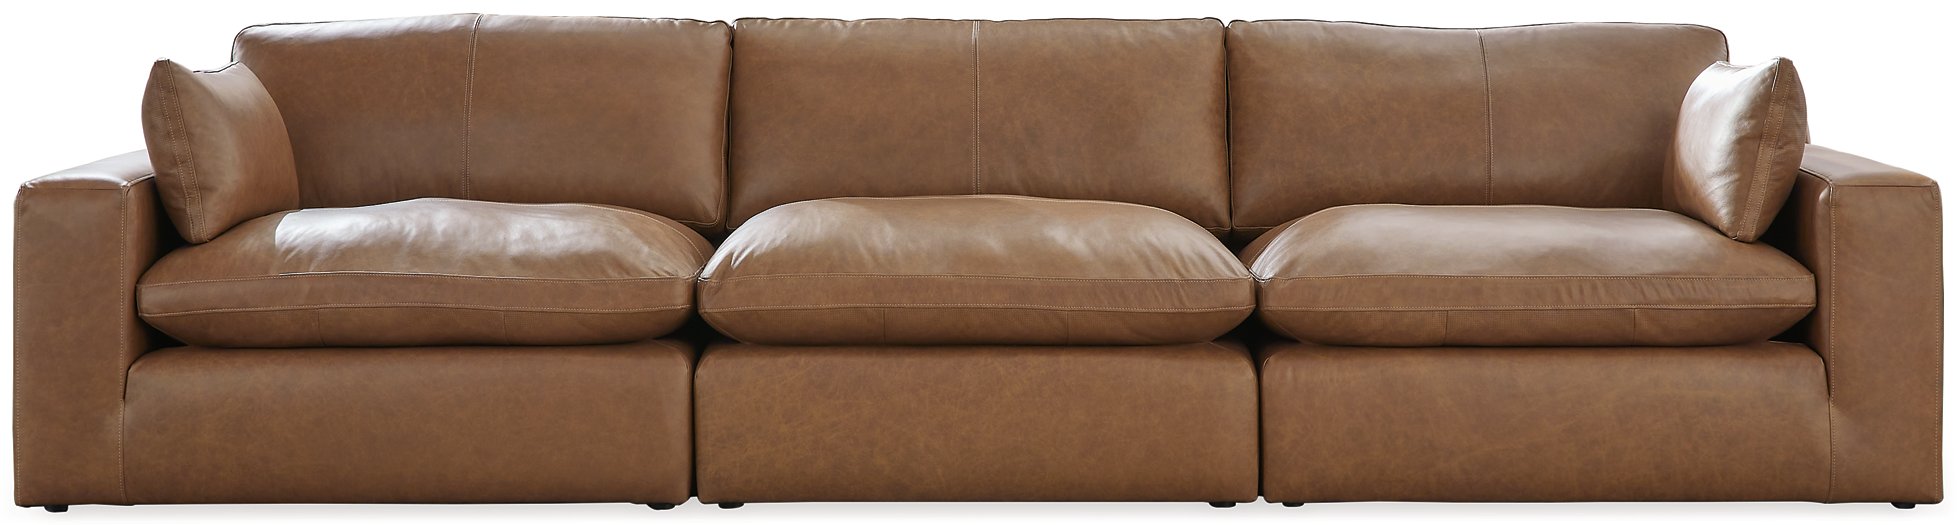 Emilia 3-Piece Sectional Sofa image